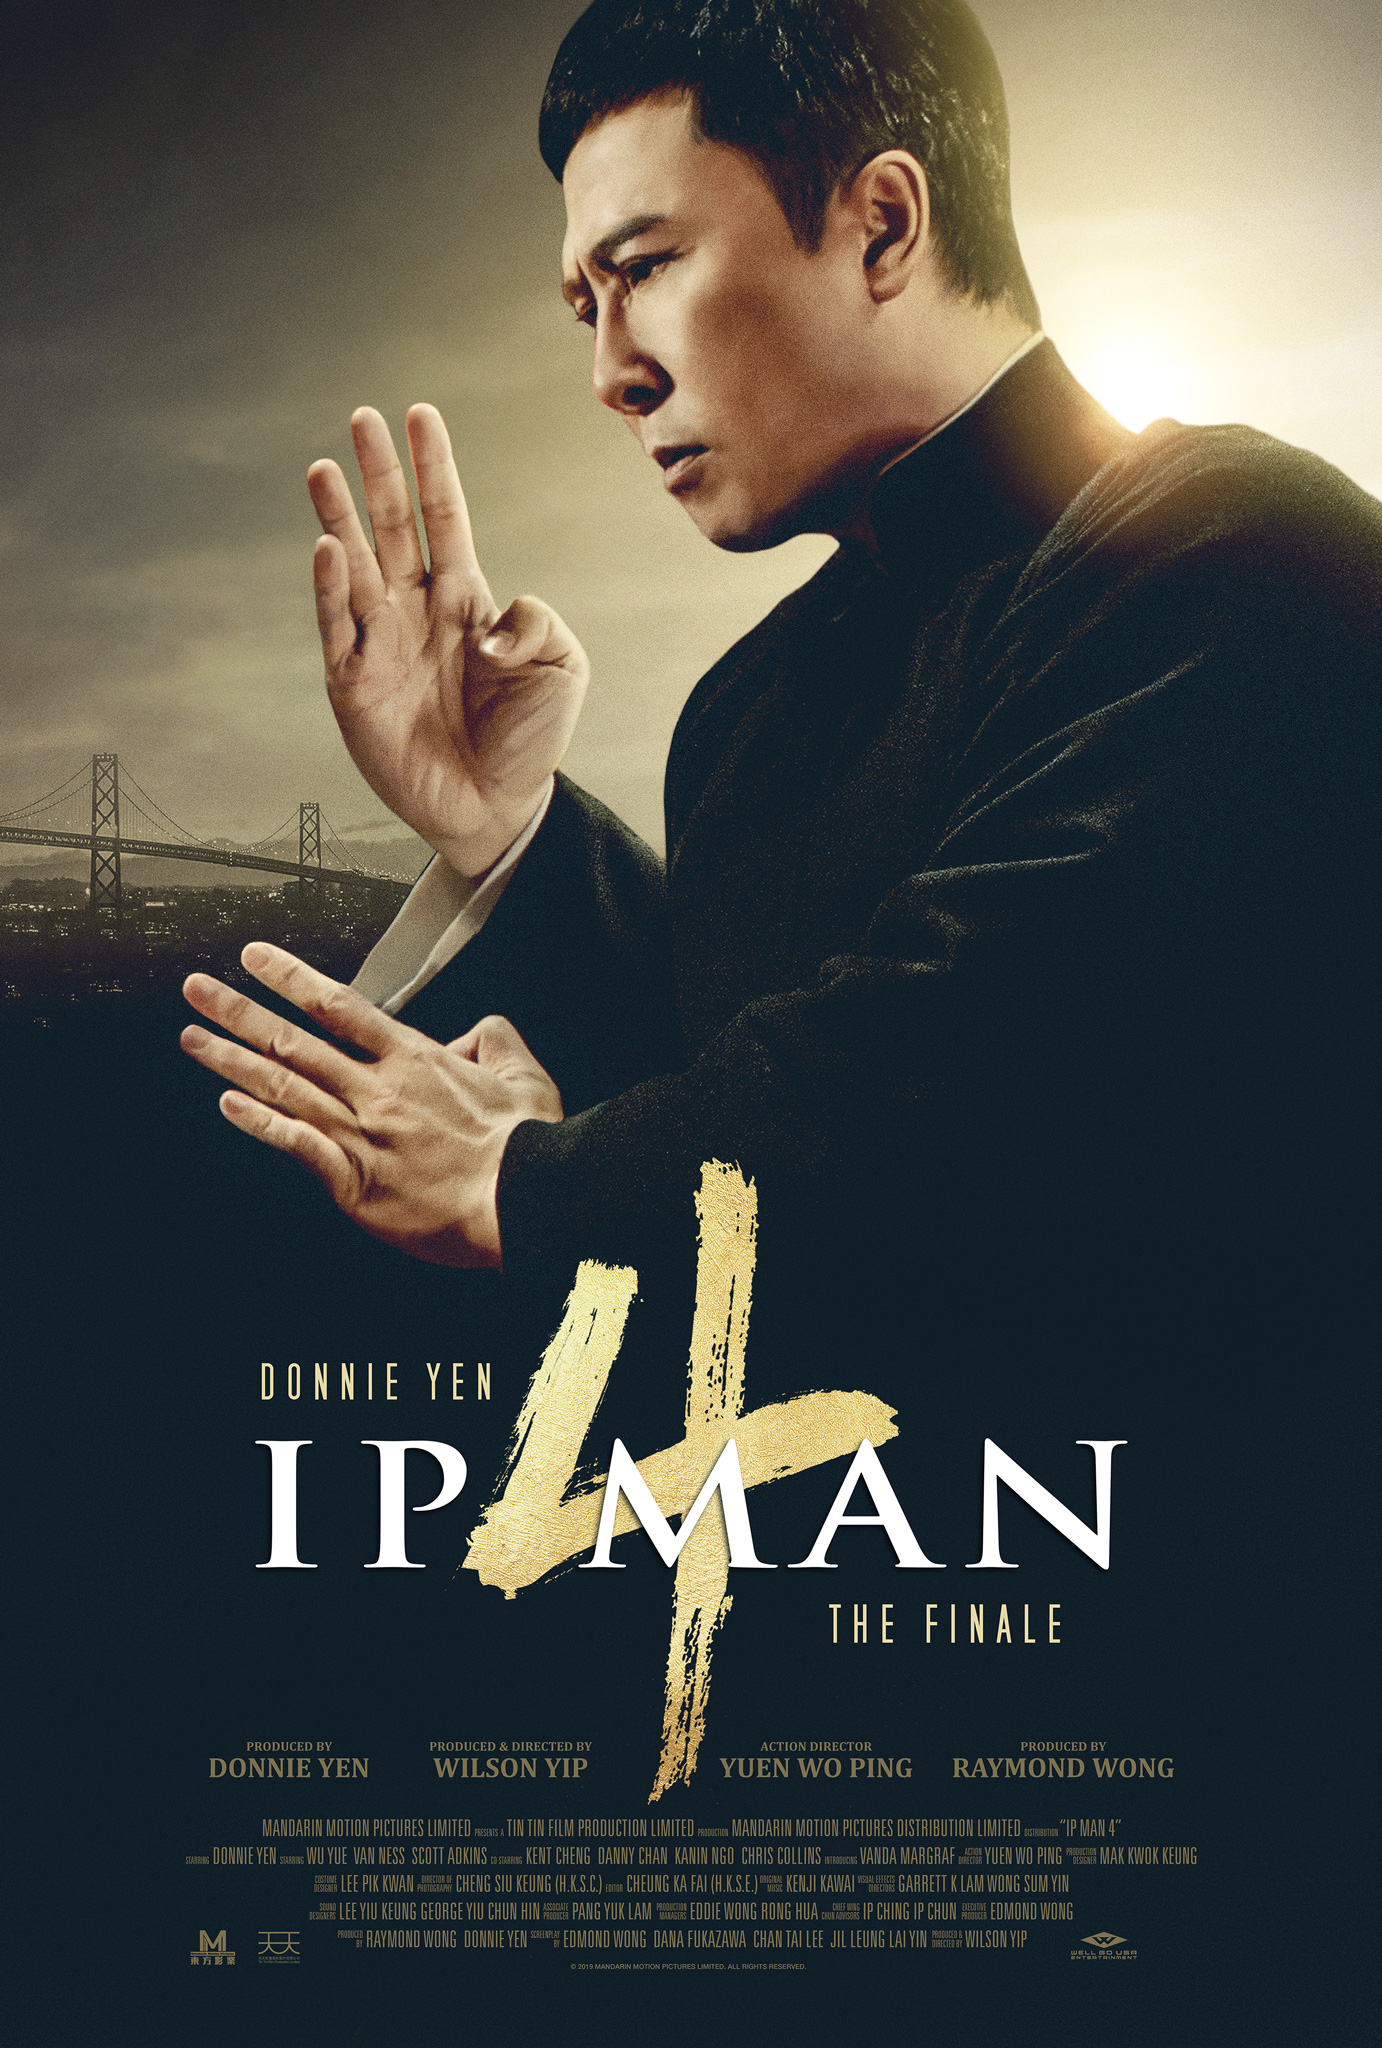 Ip Man 4 At An Amc Theatre Near You